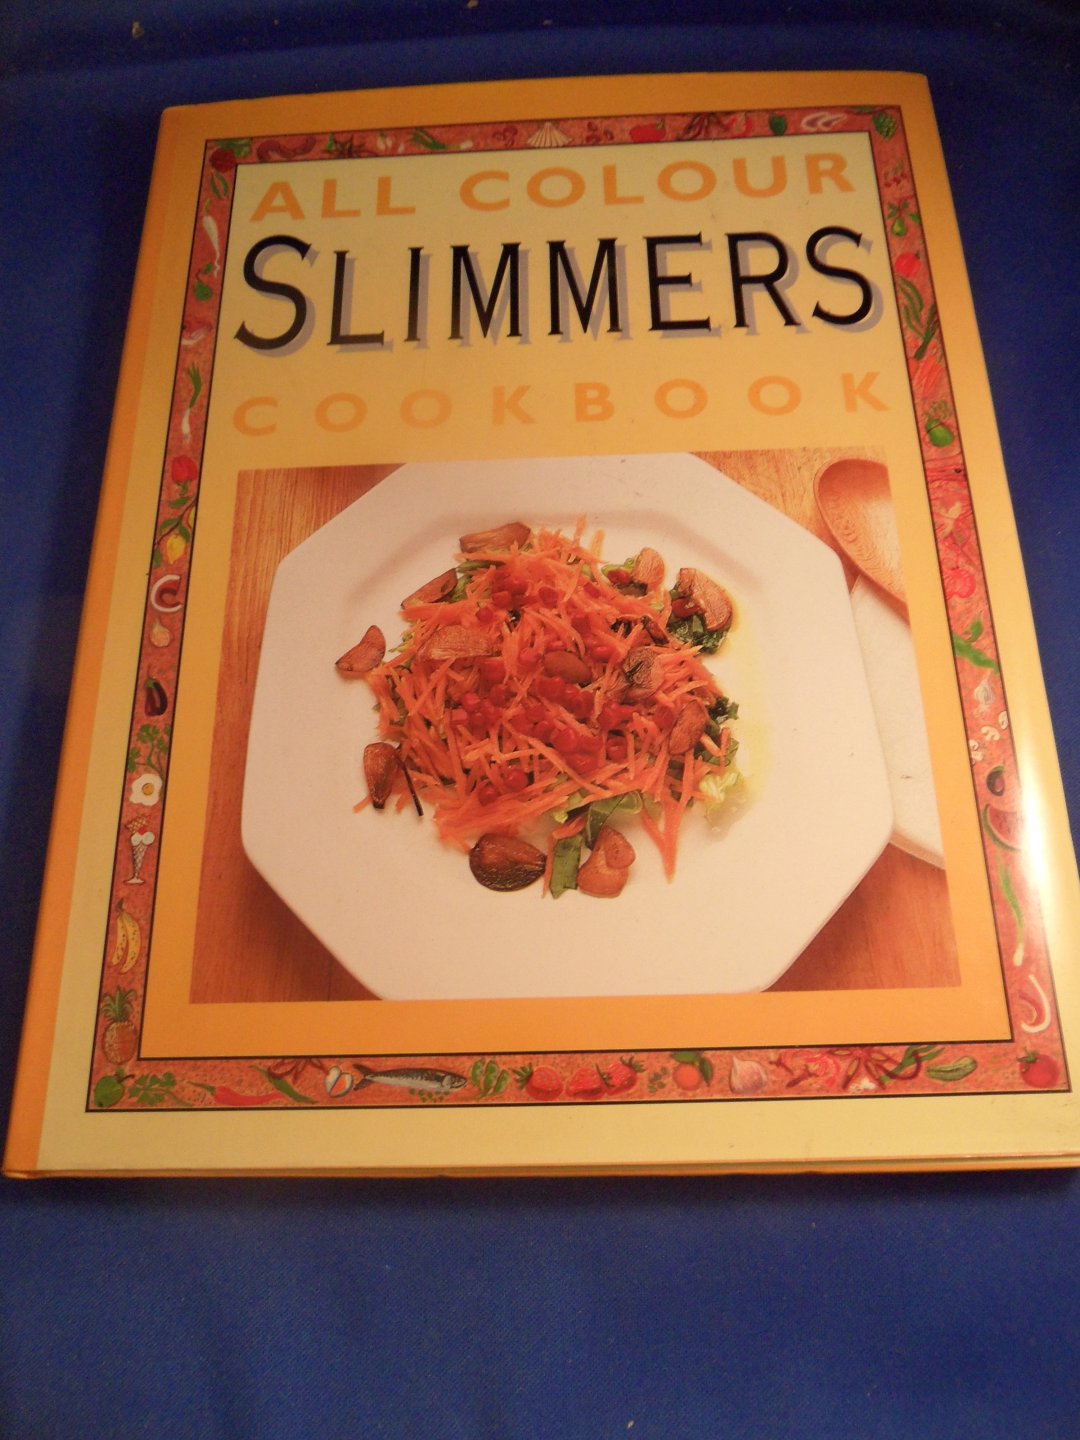 div - All colour slimmers cookbook